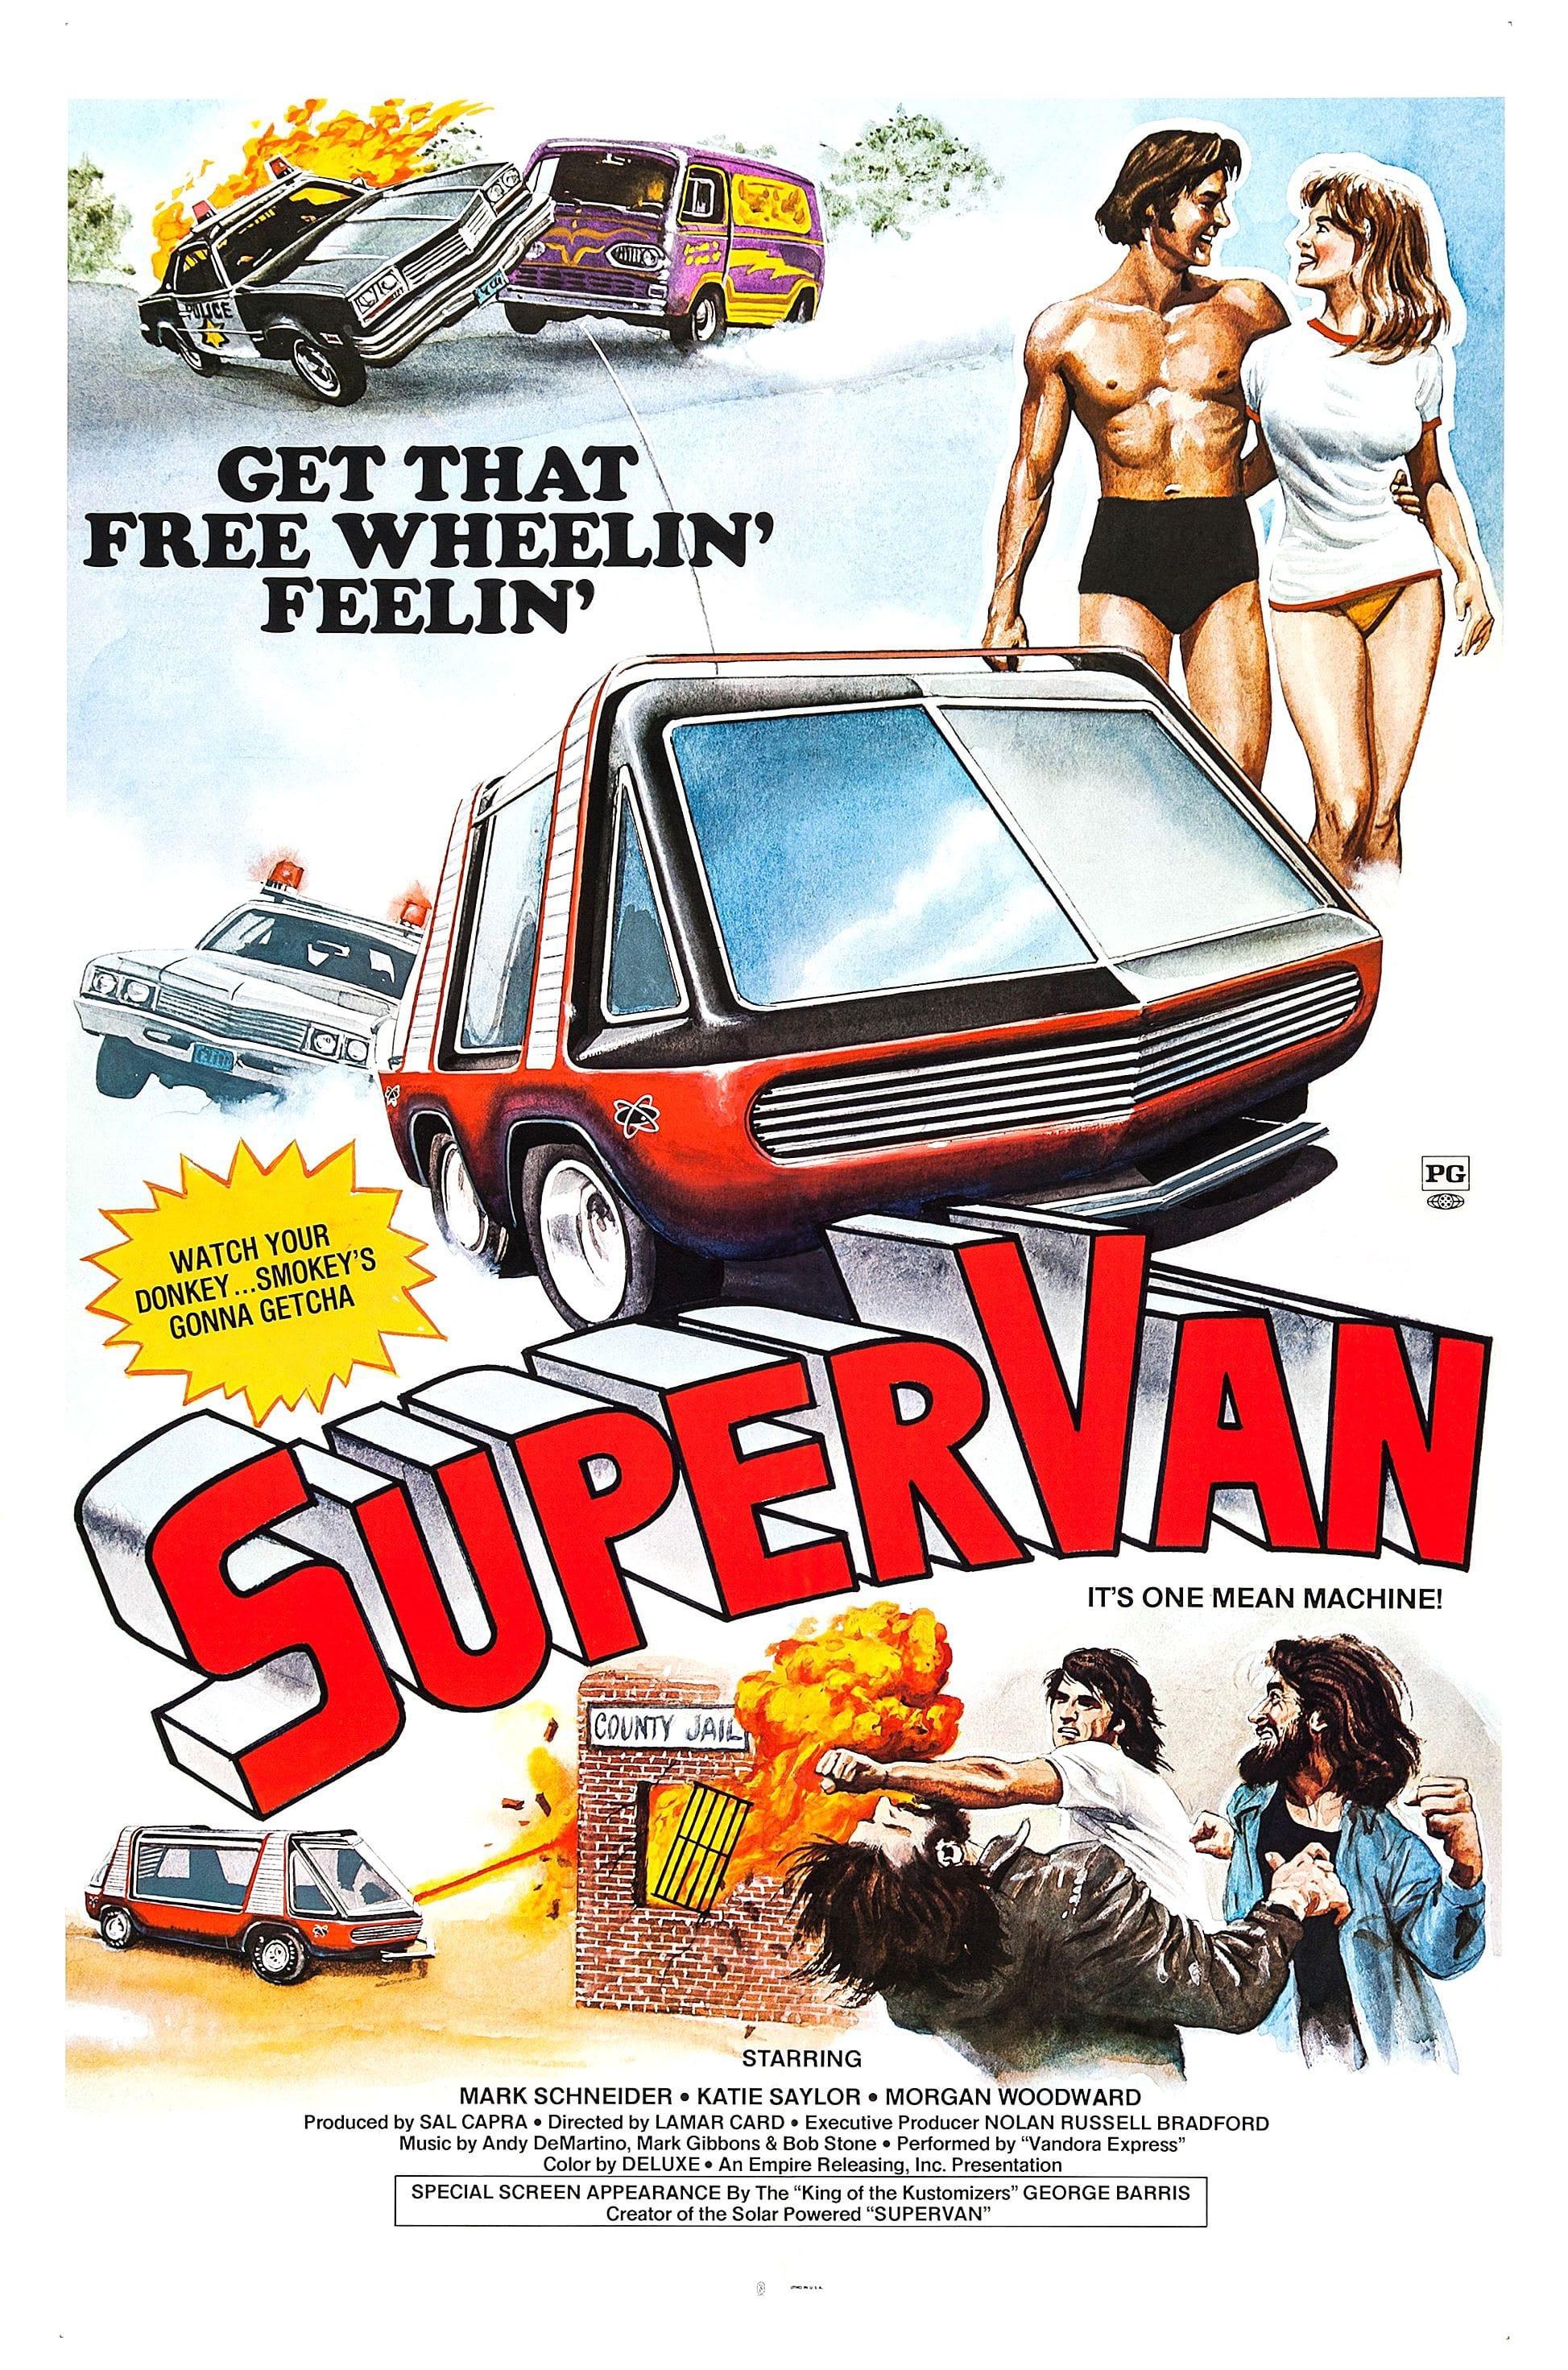 Supervan poster